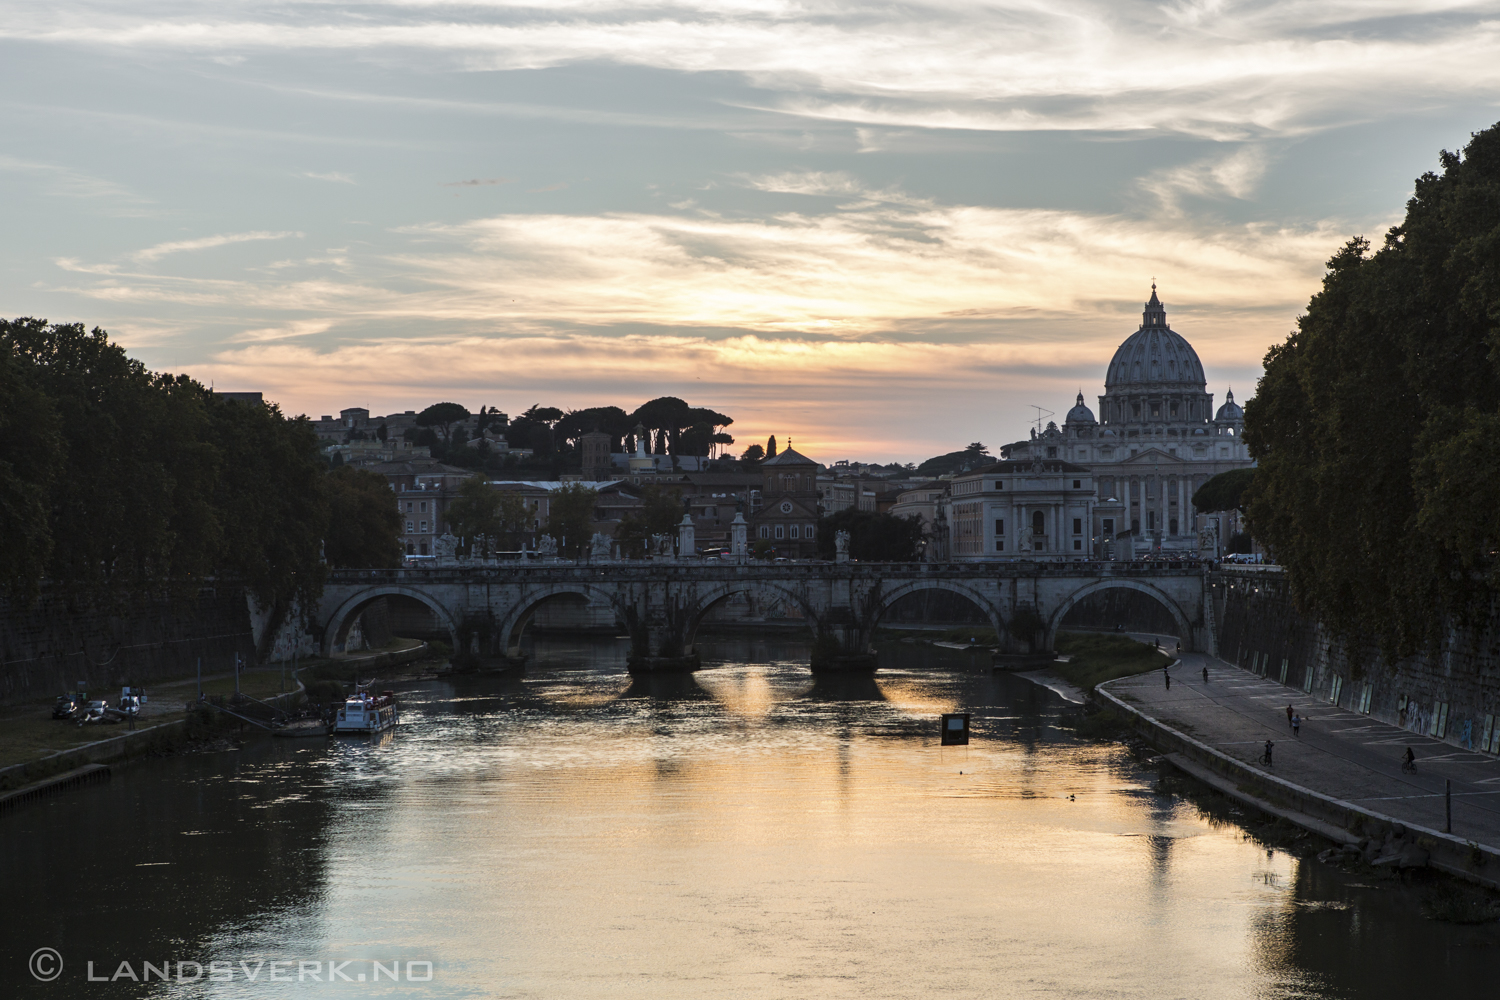 Fiume Tevere. Rome, Italy. 

(Canon EOS 5D Mark III / Canon EF 24-70mm f/2.8 L USM)